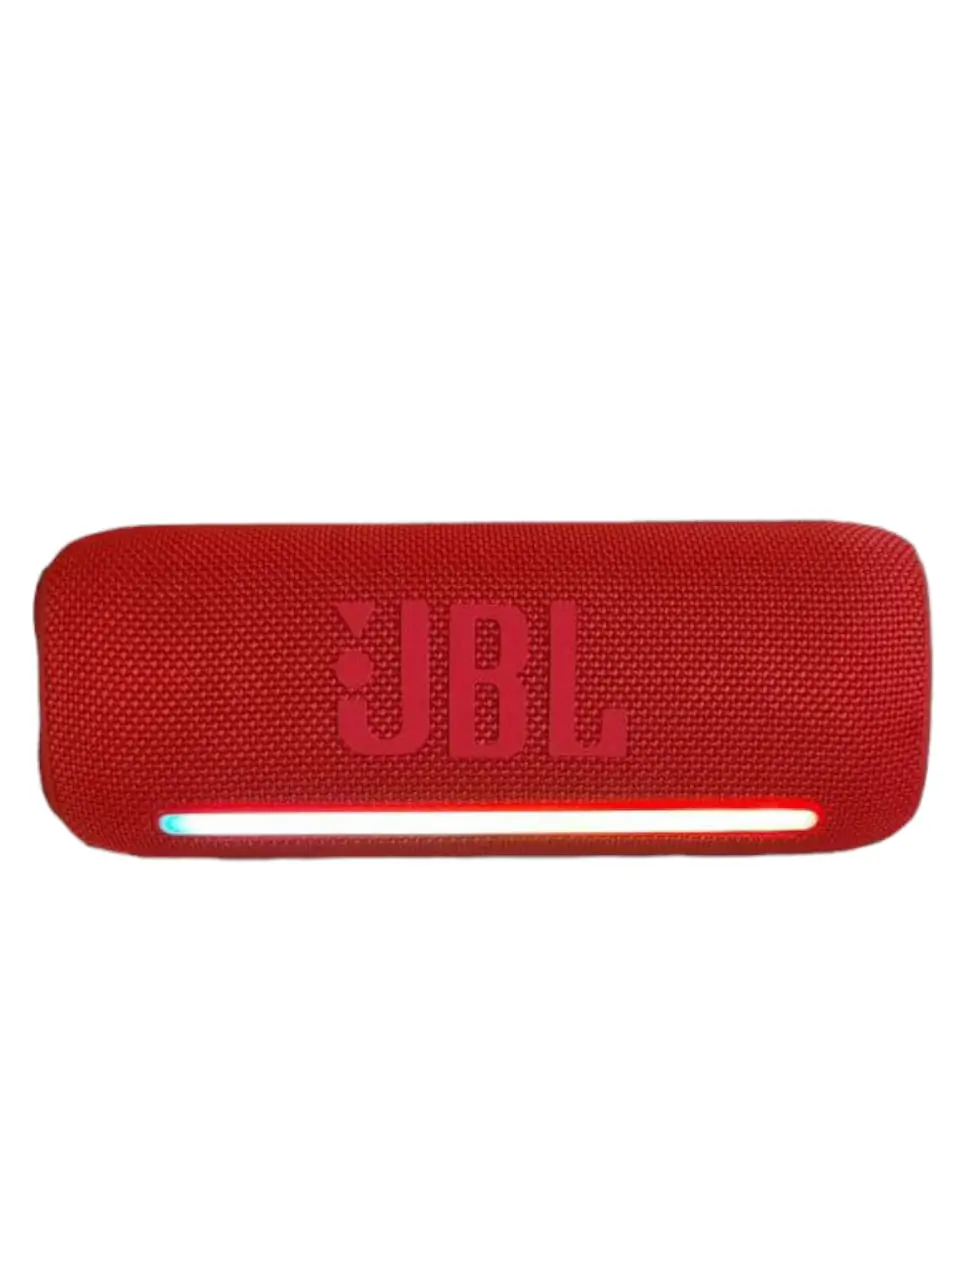 Parlante JBL P5 Pro Rojo Bluetooth Inalámbrico 1.1